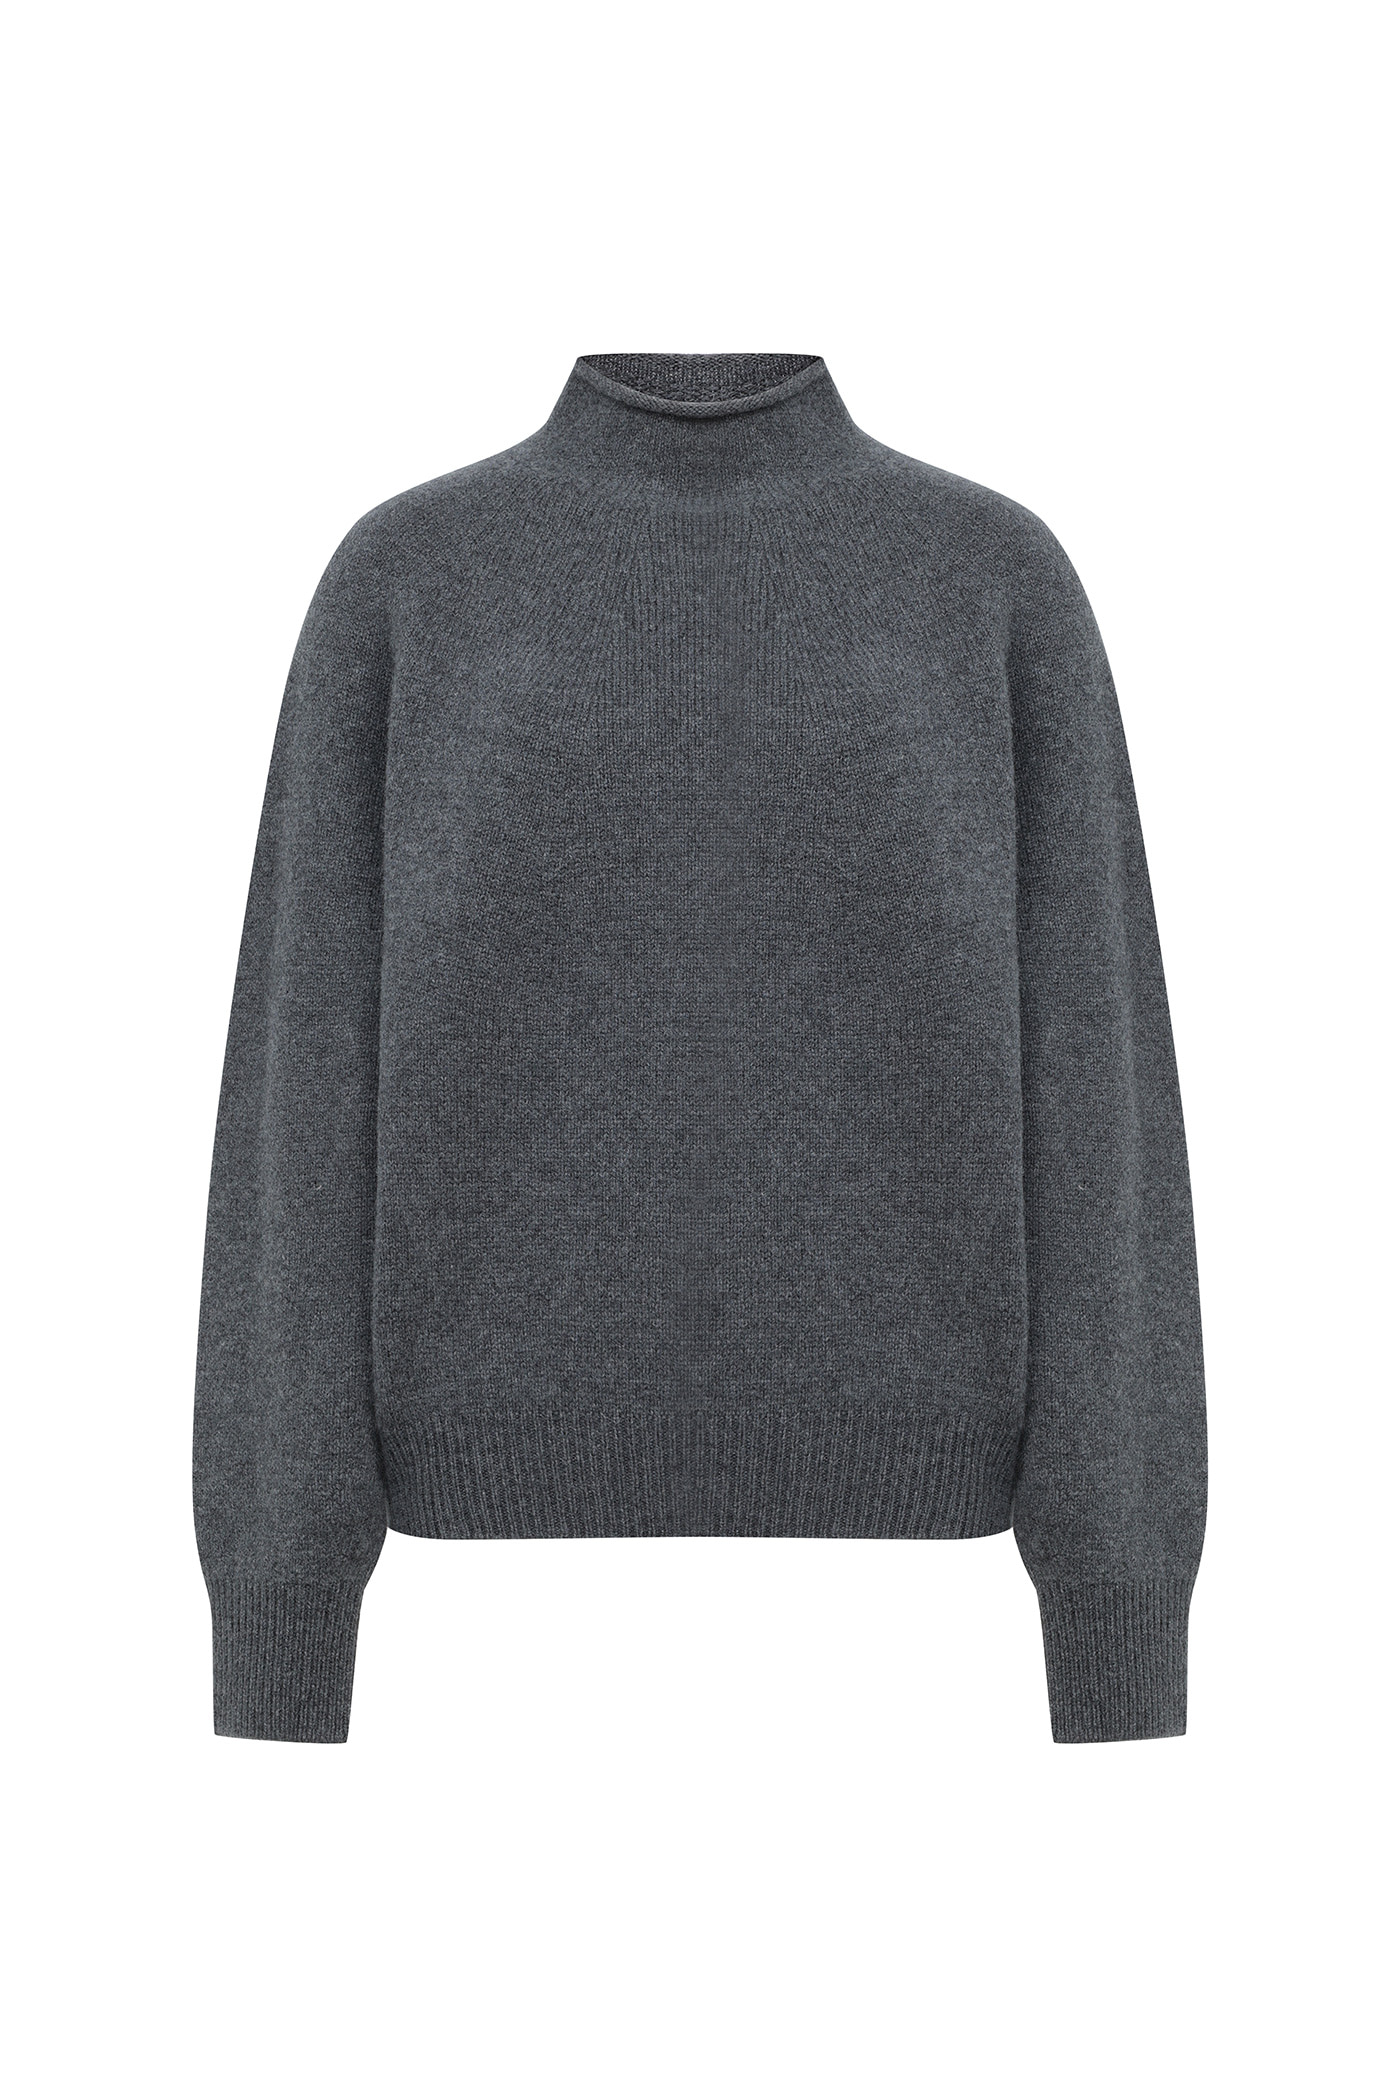 Merino Wool 100 Wholegarment Knit[LMBBWIKN158]-Dark Gray